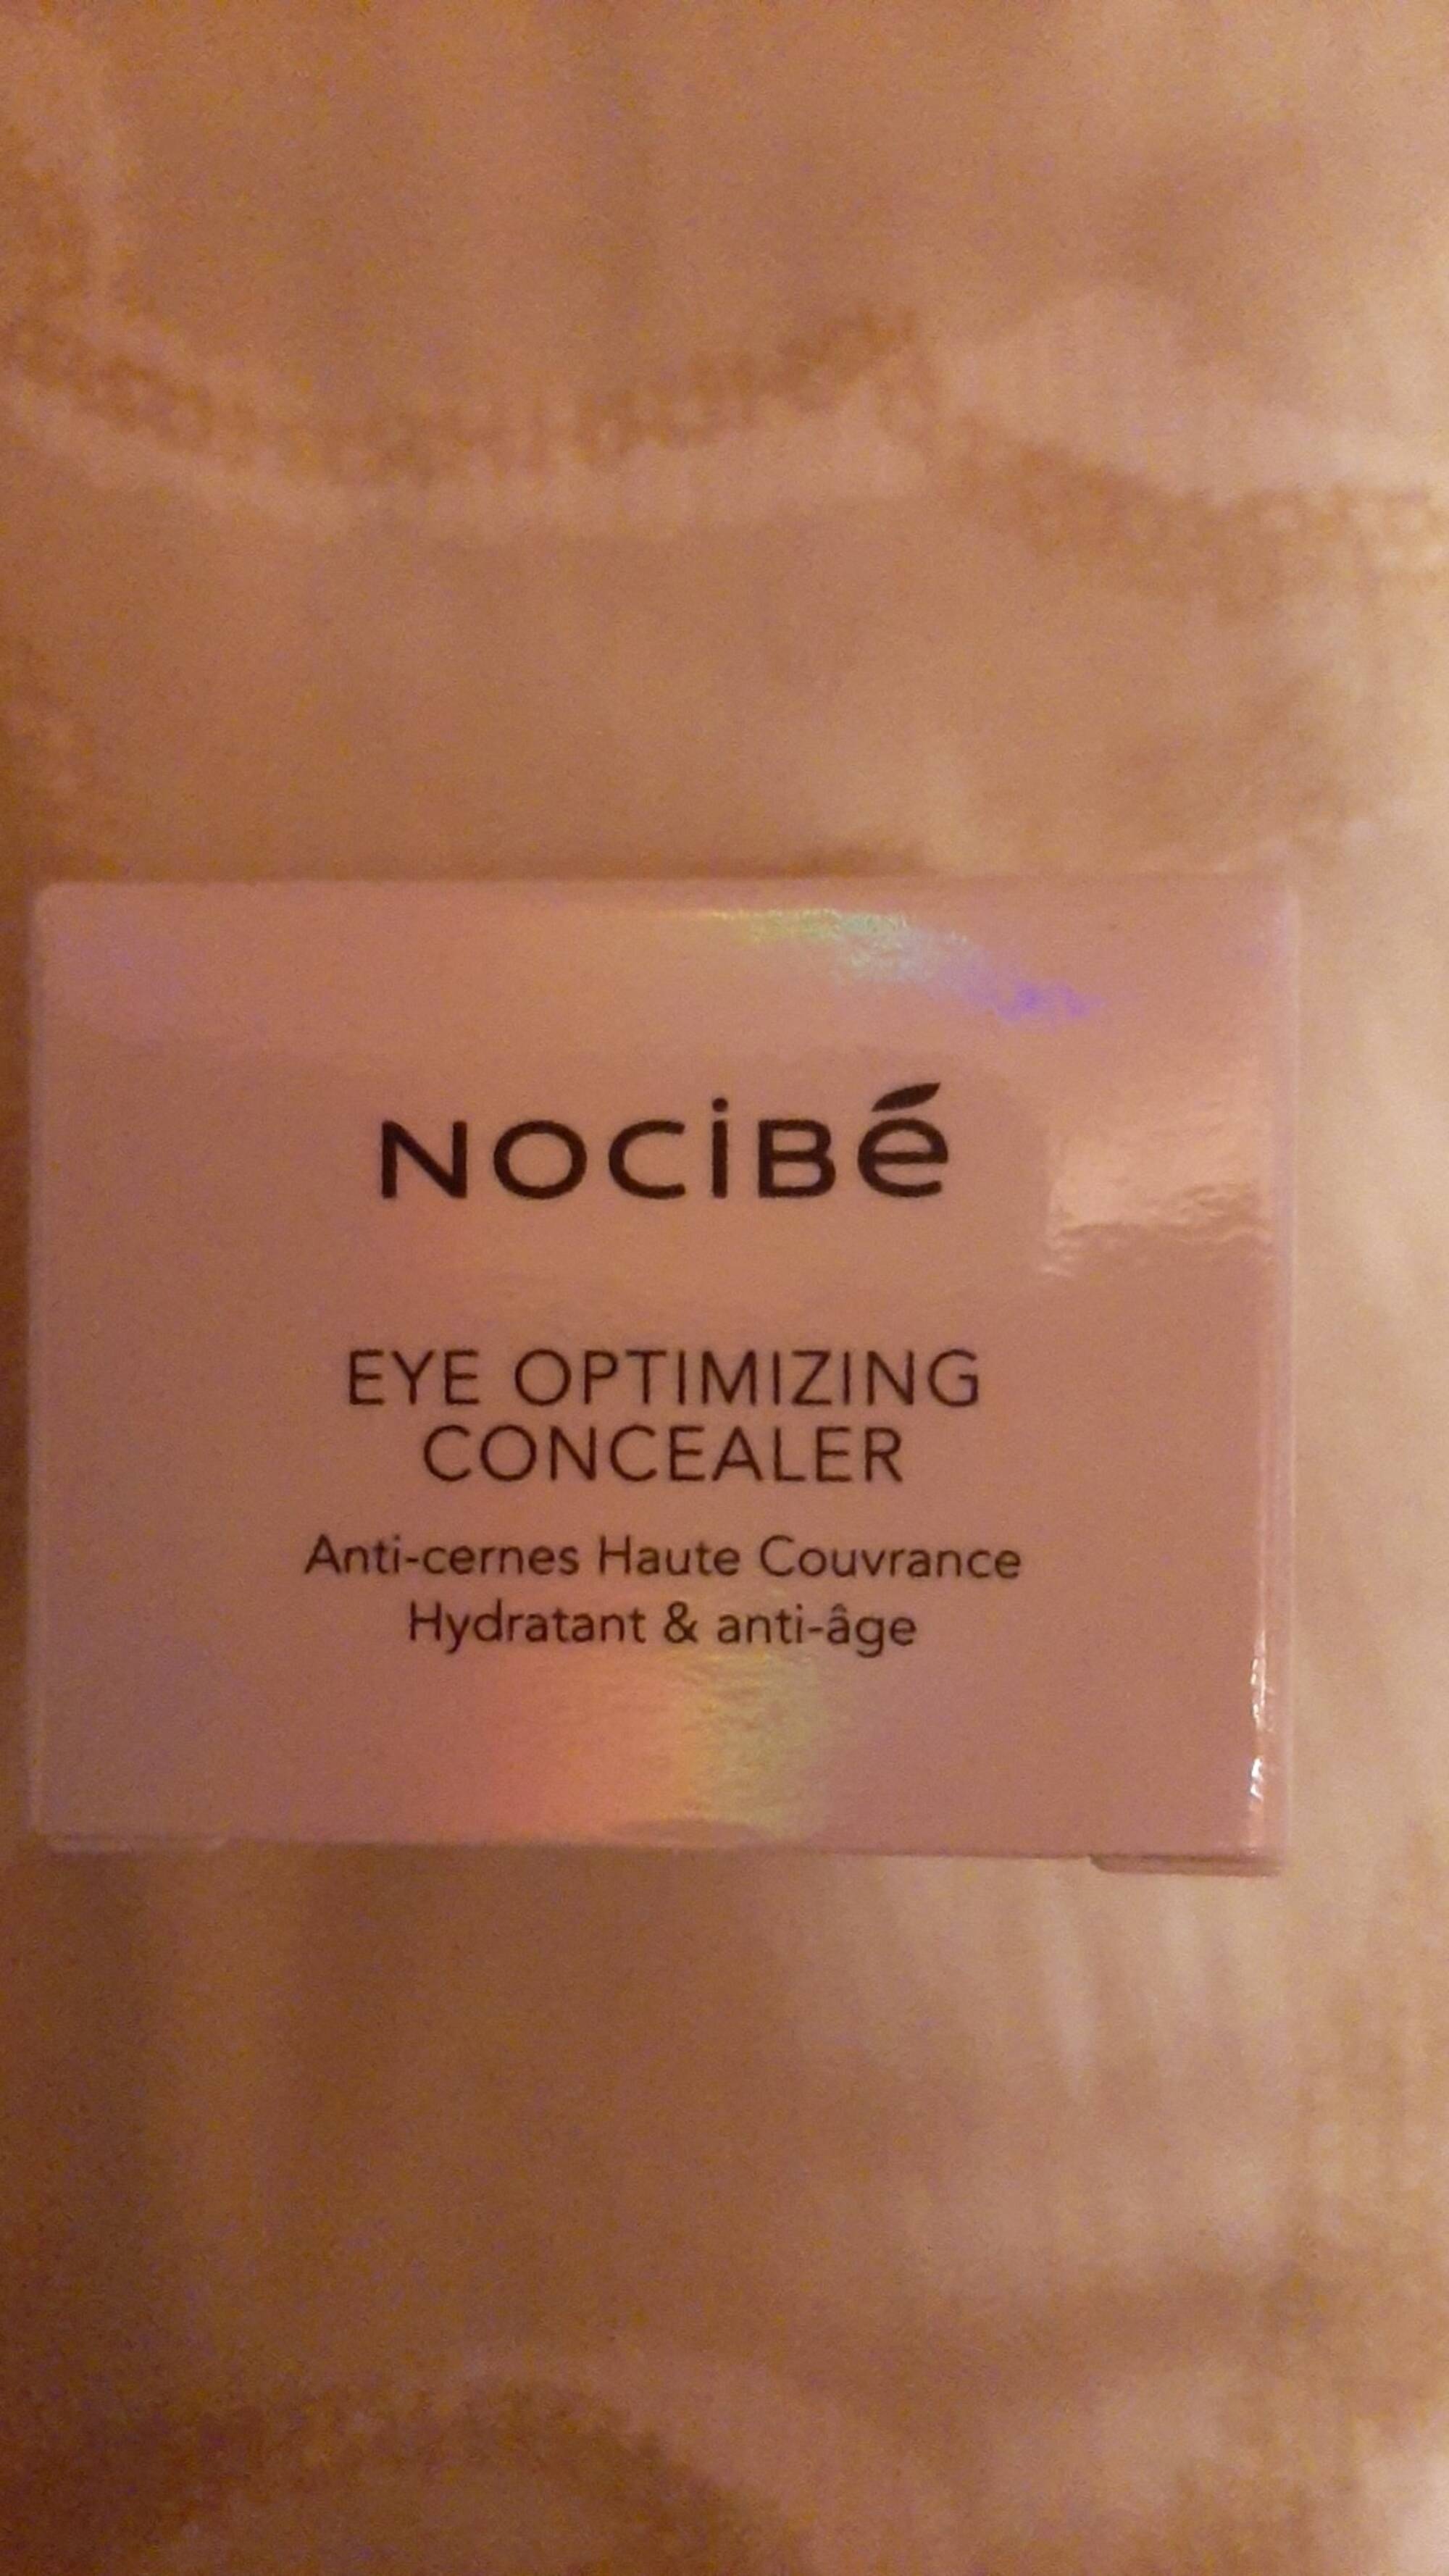 NOCIBÉ - Eye optimizing concealer